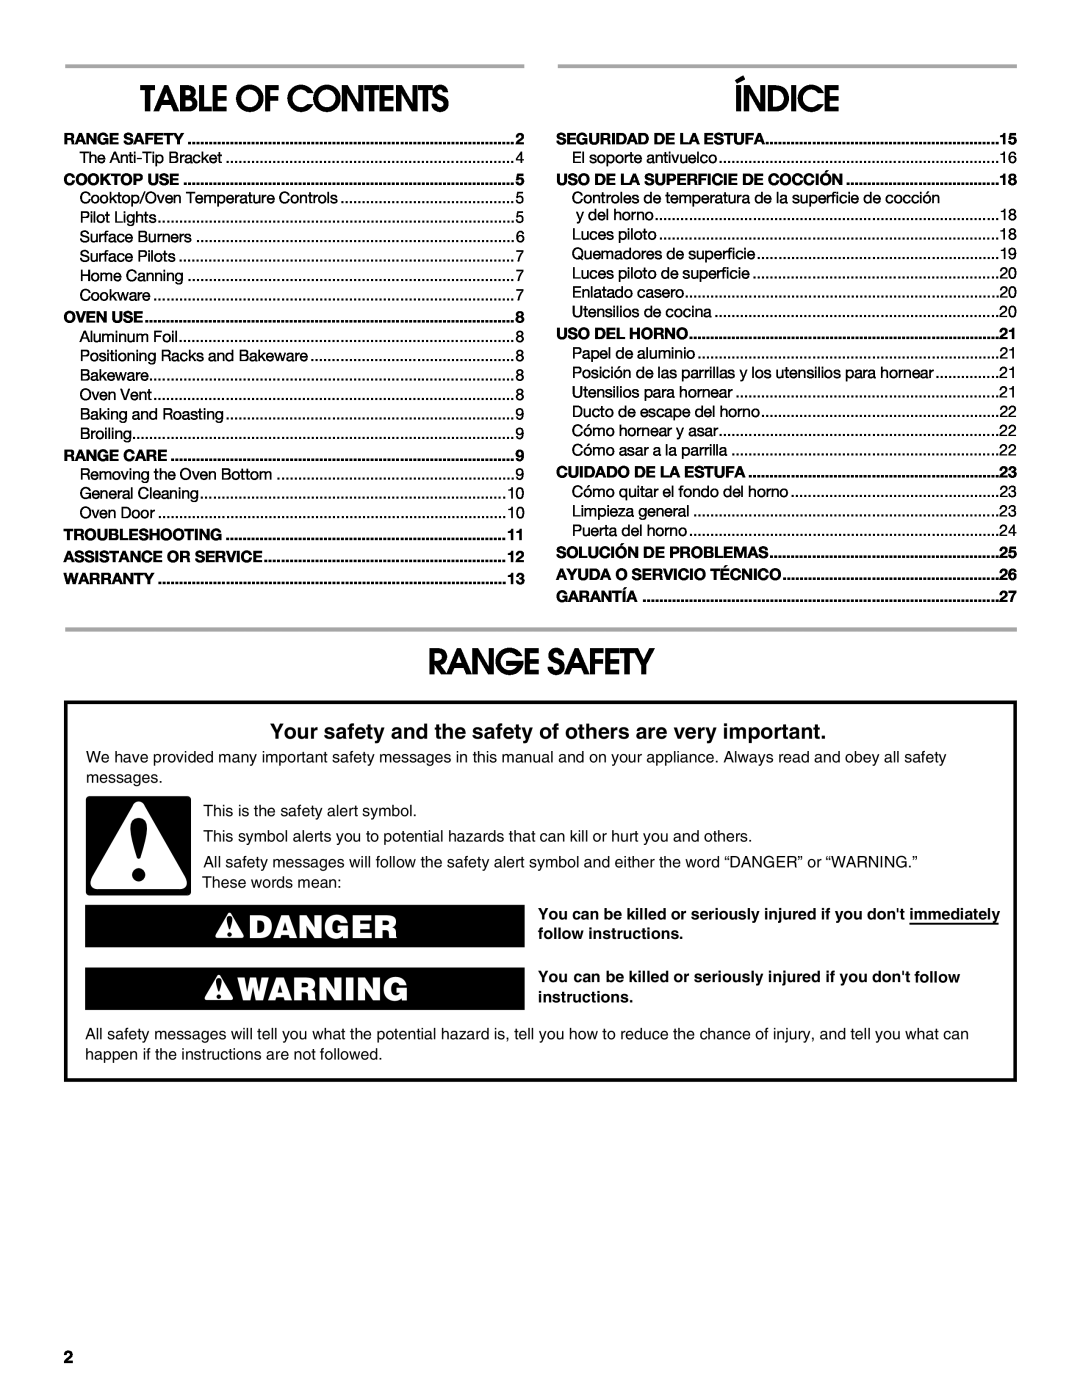 Estate W10173325A manual Table Of Contents, Range Safety, Índice, Danger 